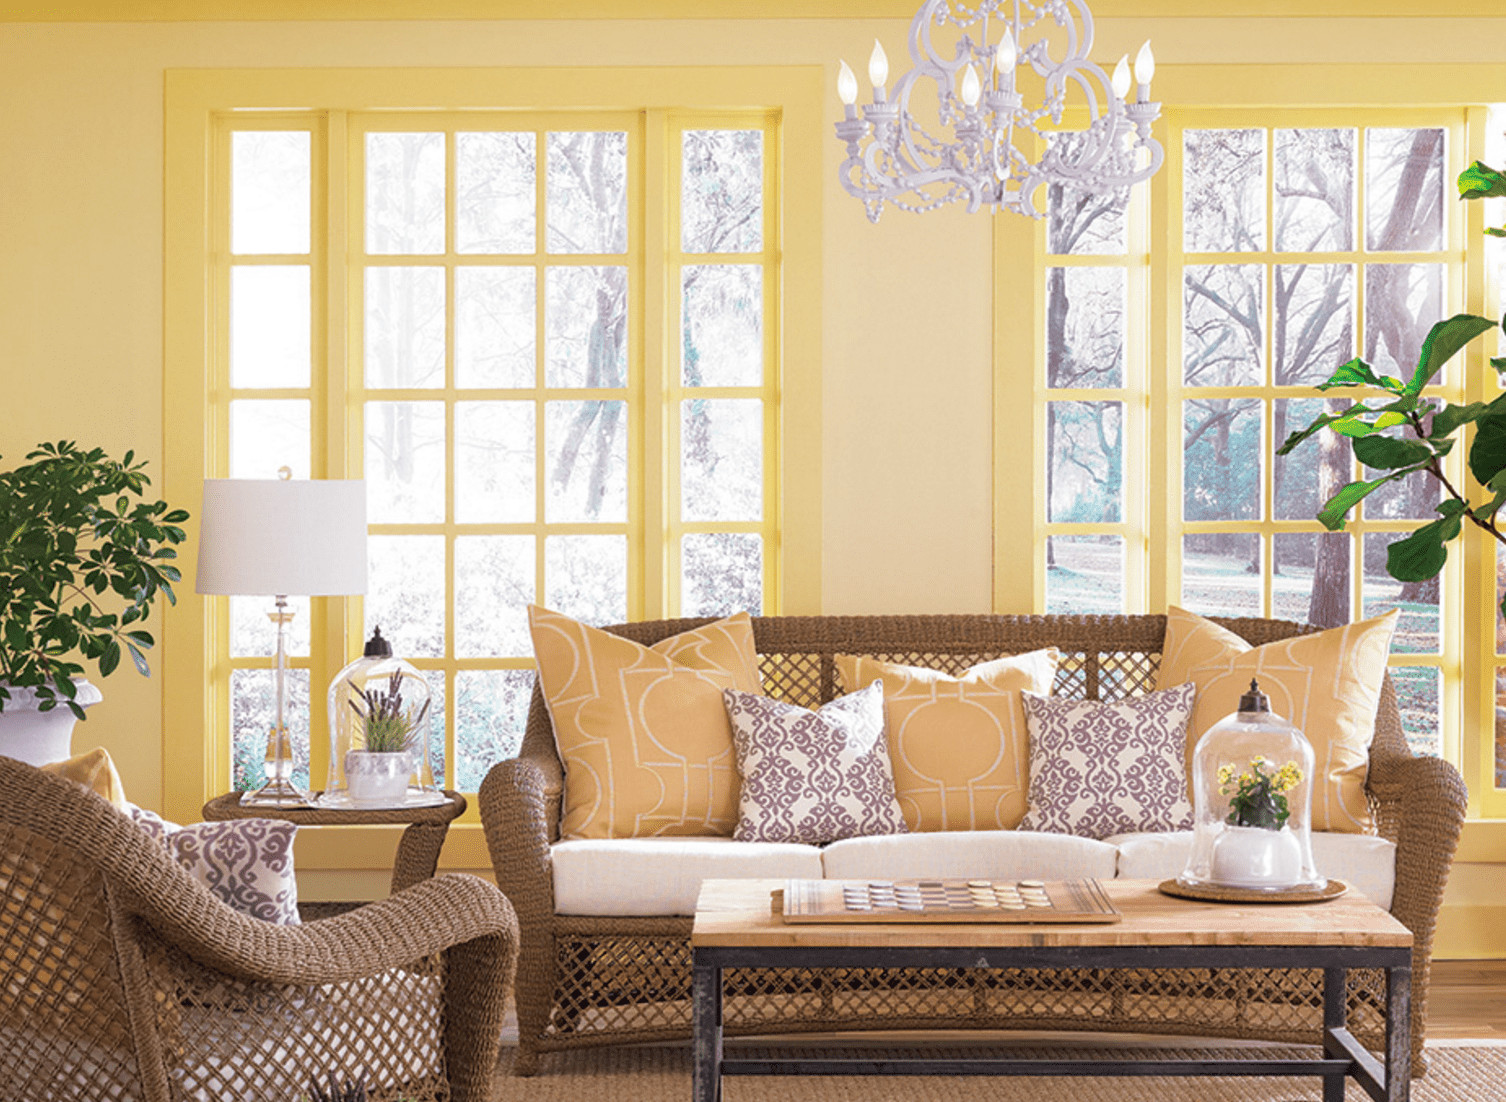 Best Living Room Paint Colours
 11 Best Neutral Paint Colors for Your Home